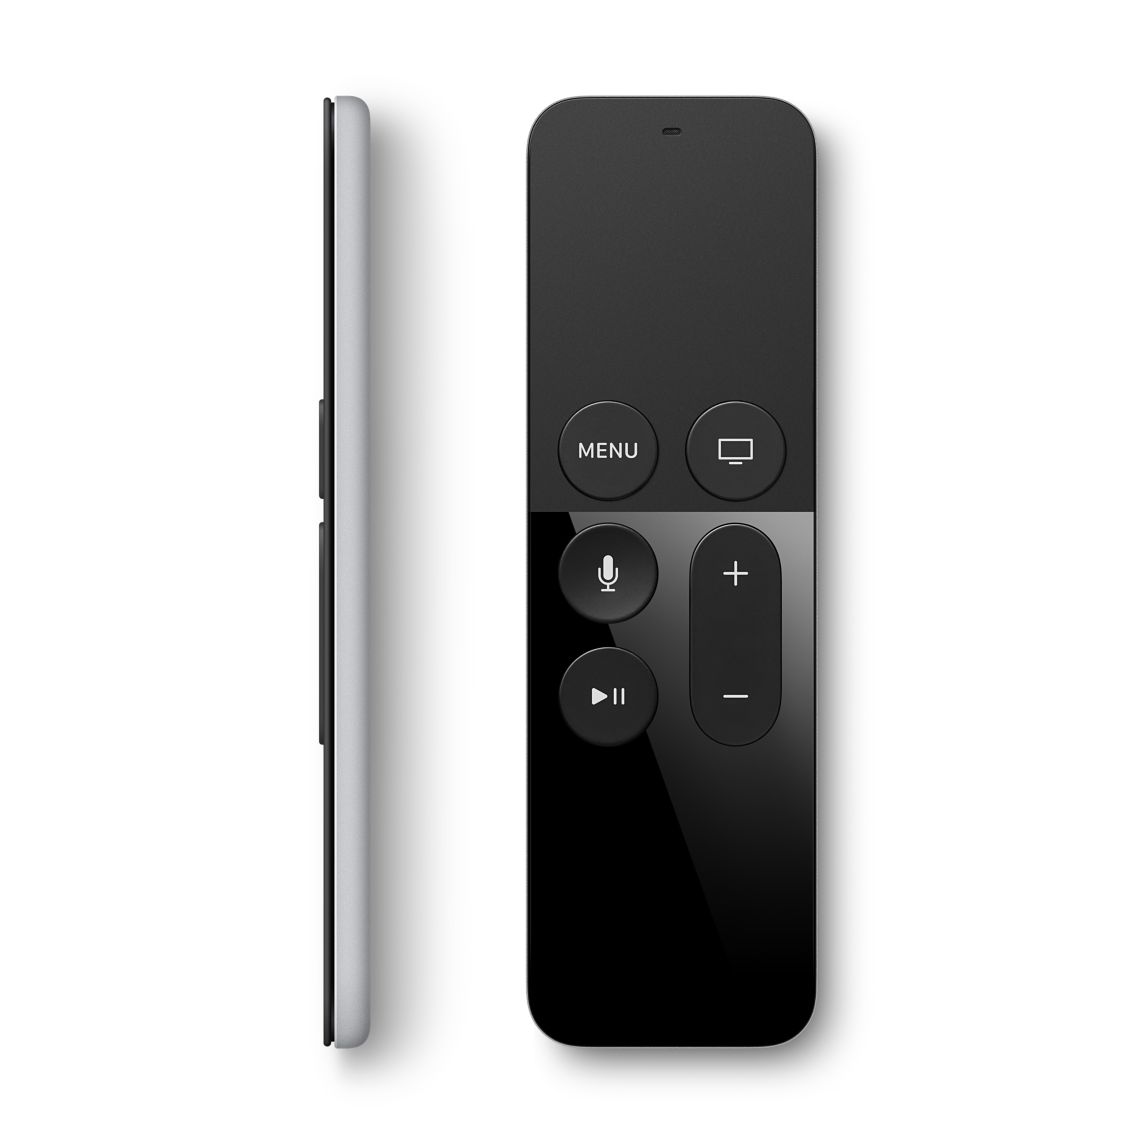 ｢Apple TV 4K｣は新しい｢Siri Remote｣を同梱か